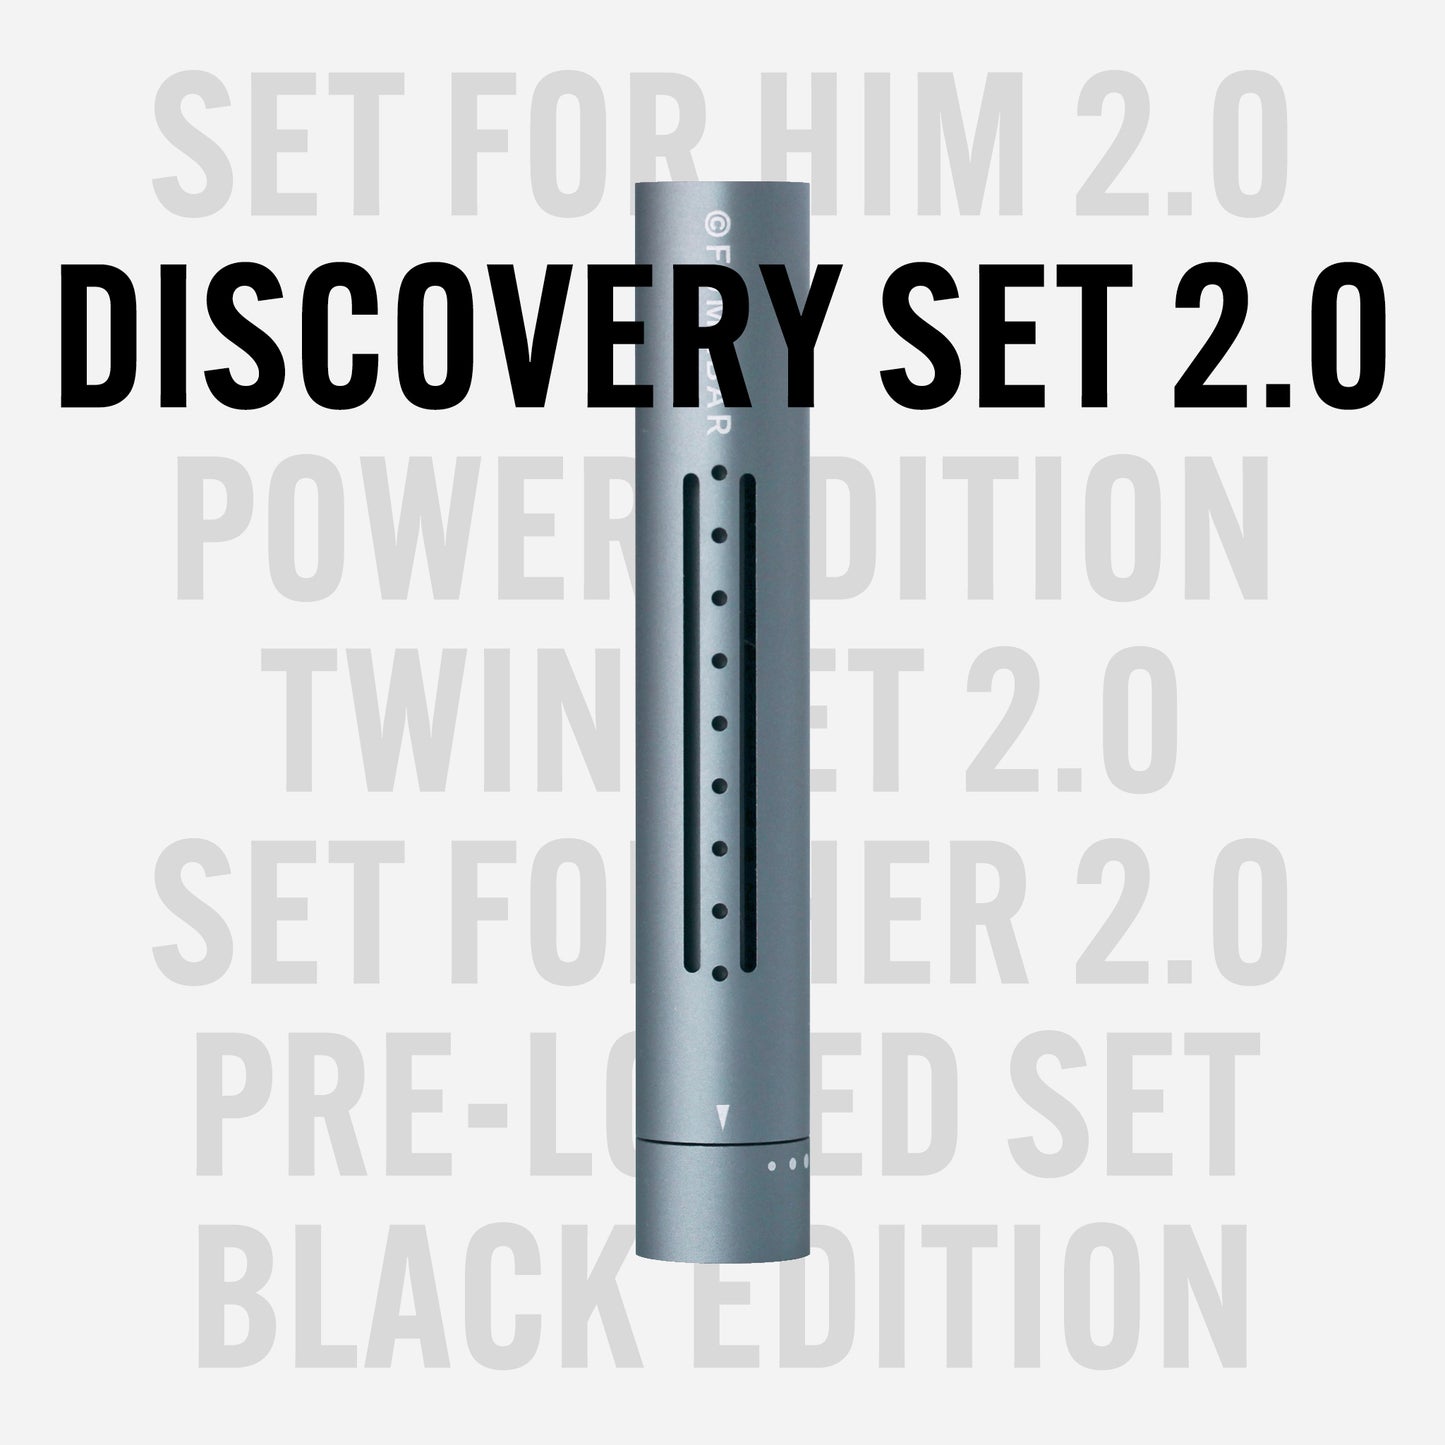 Discovery Set 2.0